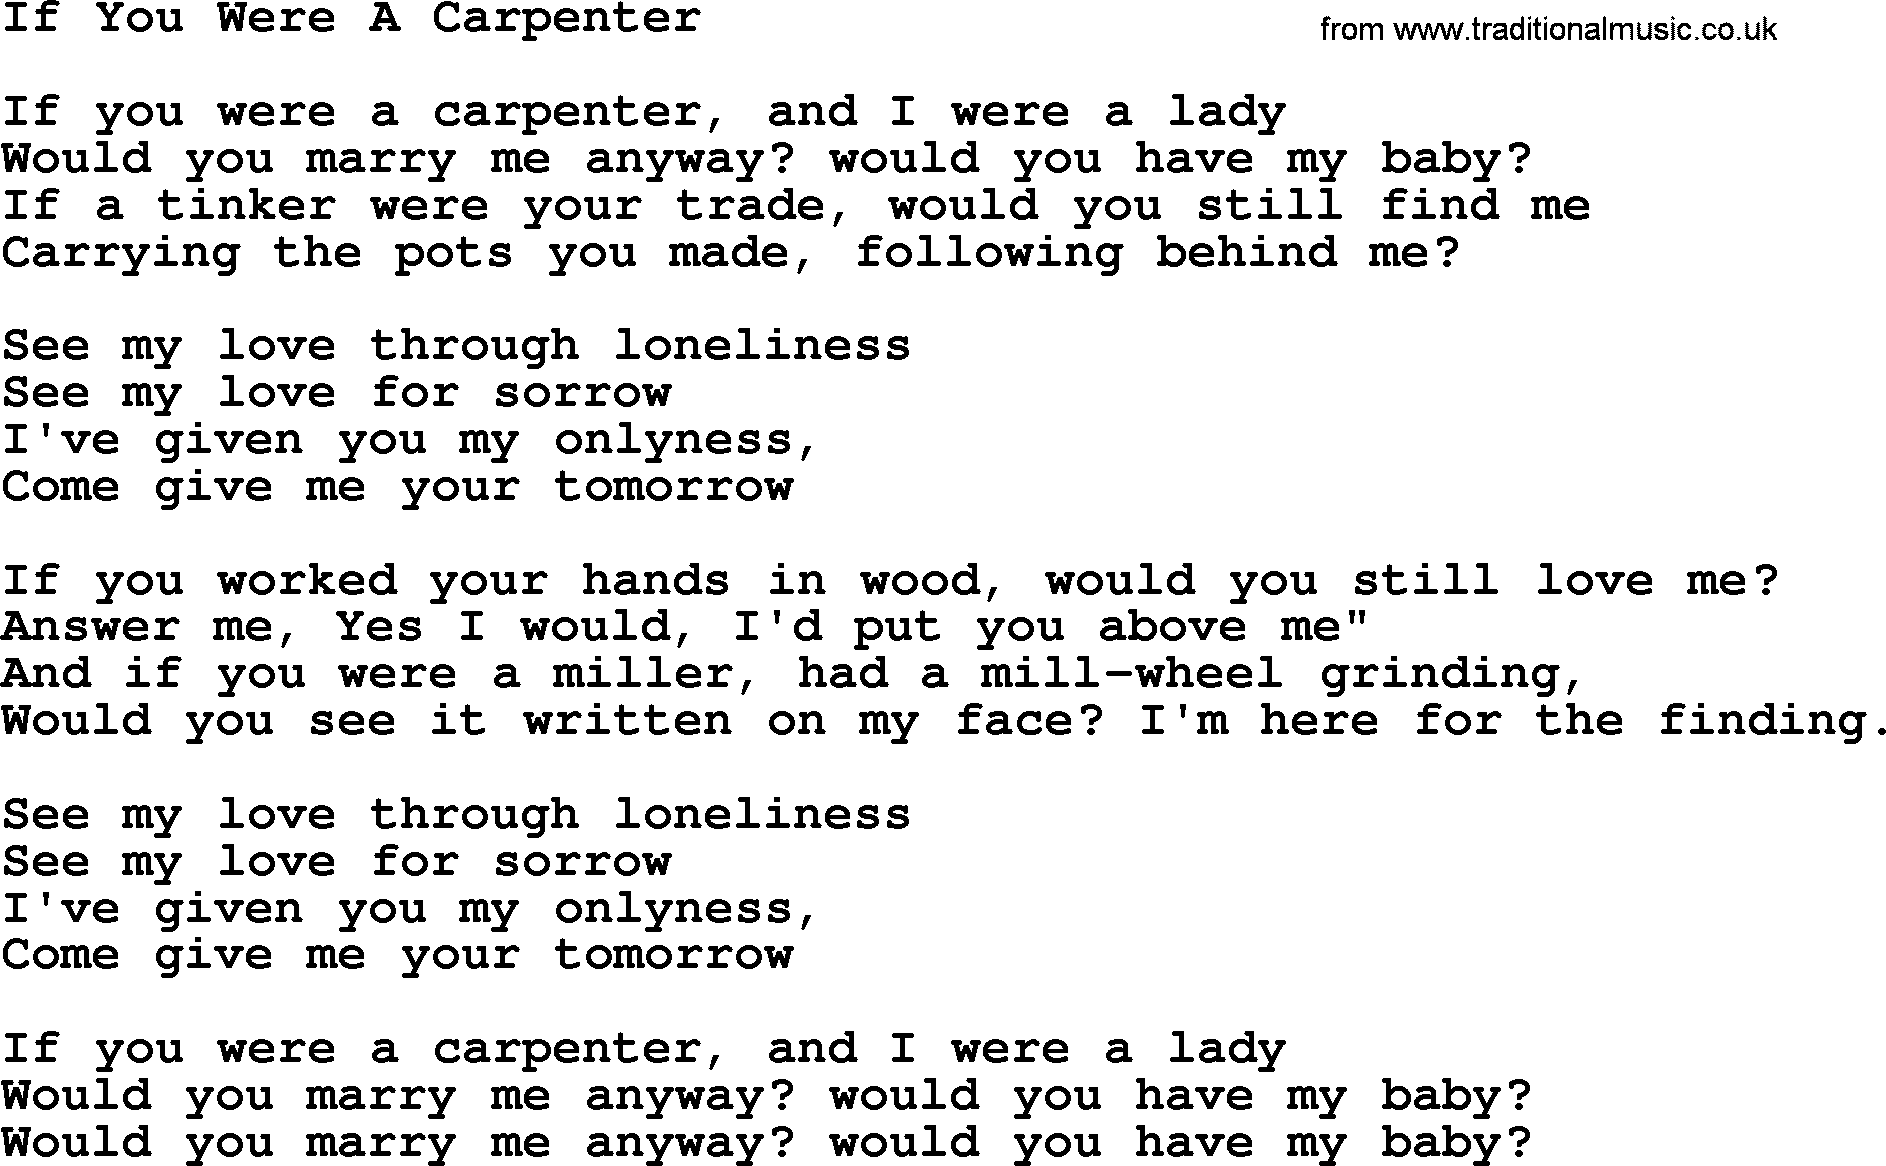 Joan Baez song If You Were A Carpenter, lyrics